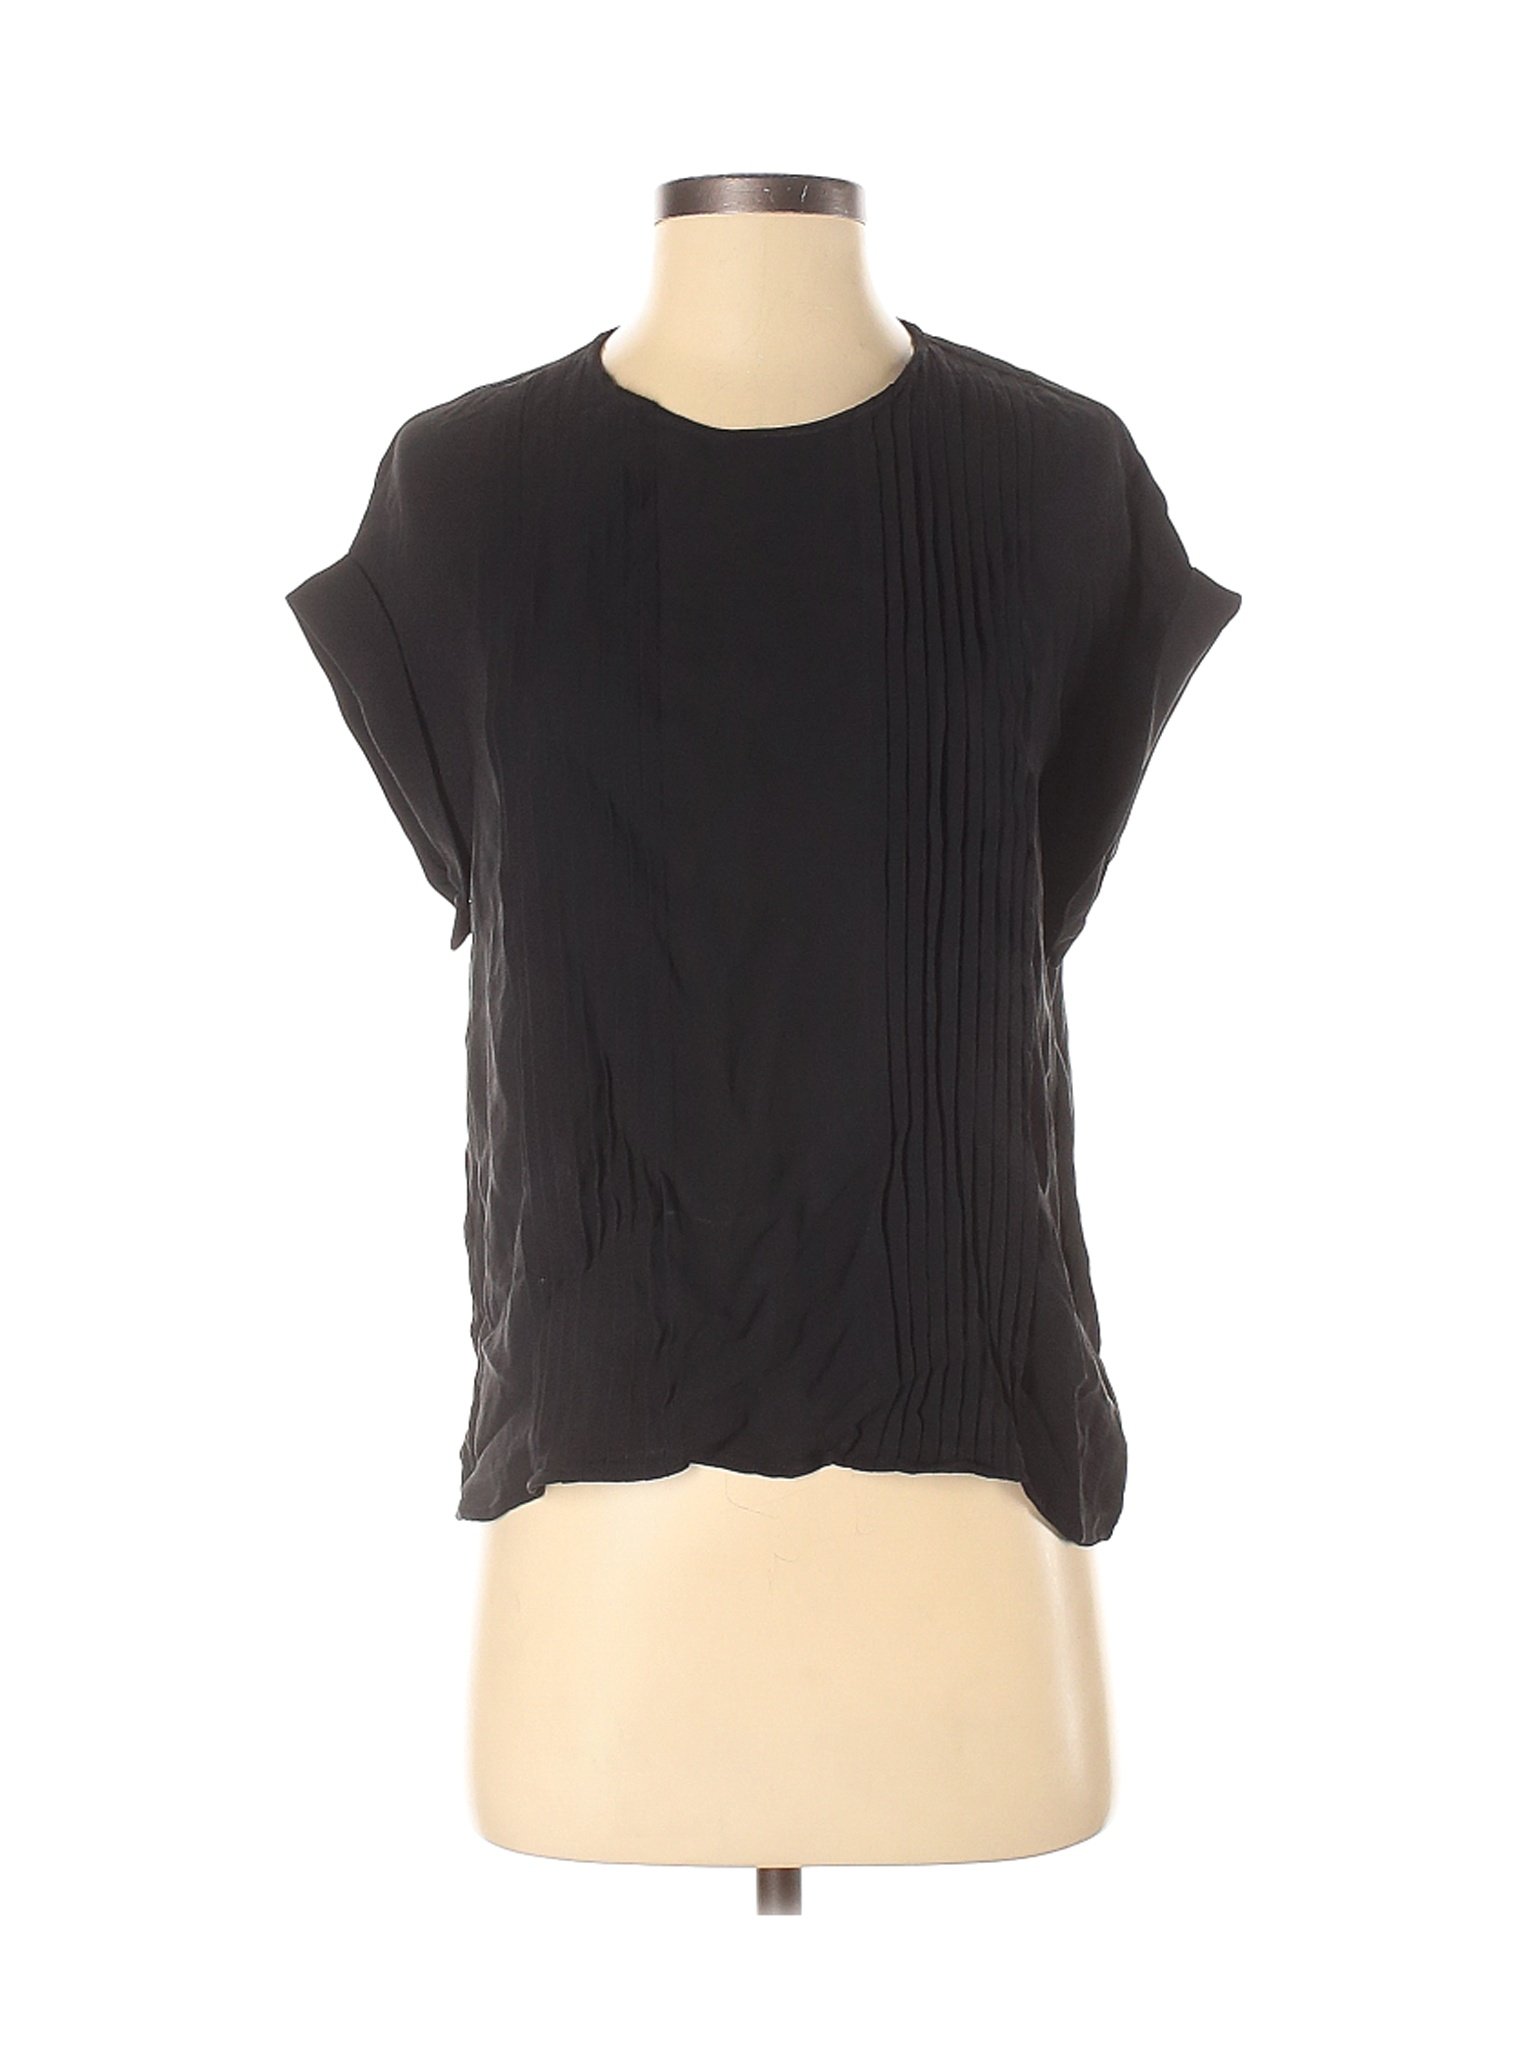 Theory Women Black Short Sleeve Silk Top S | eBay